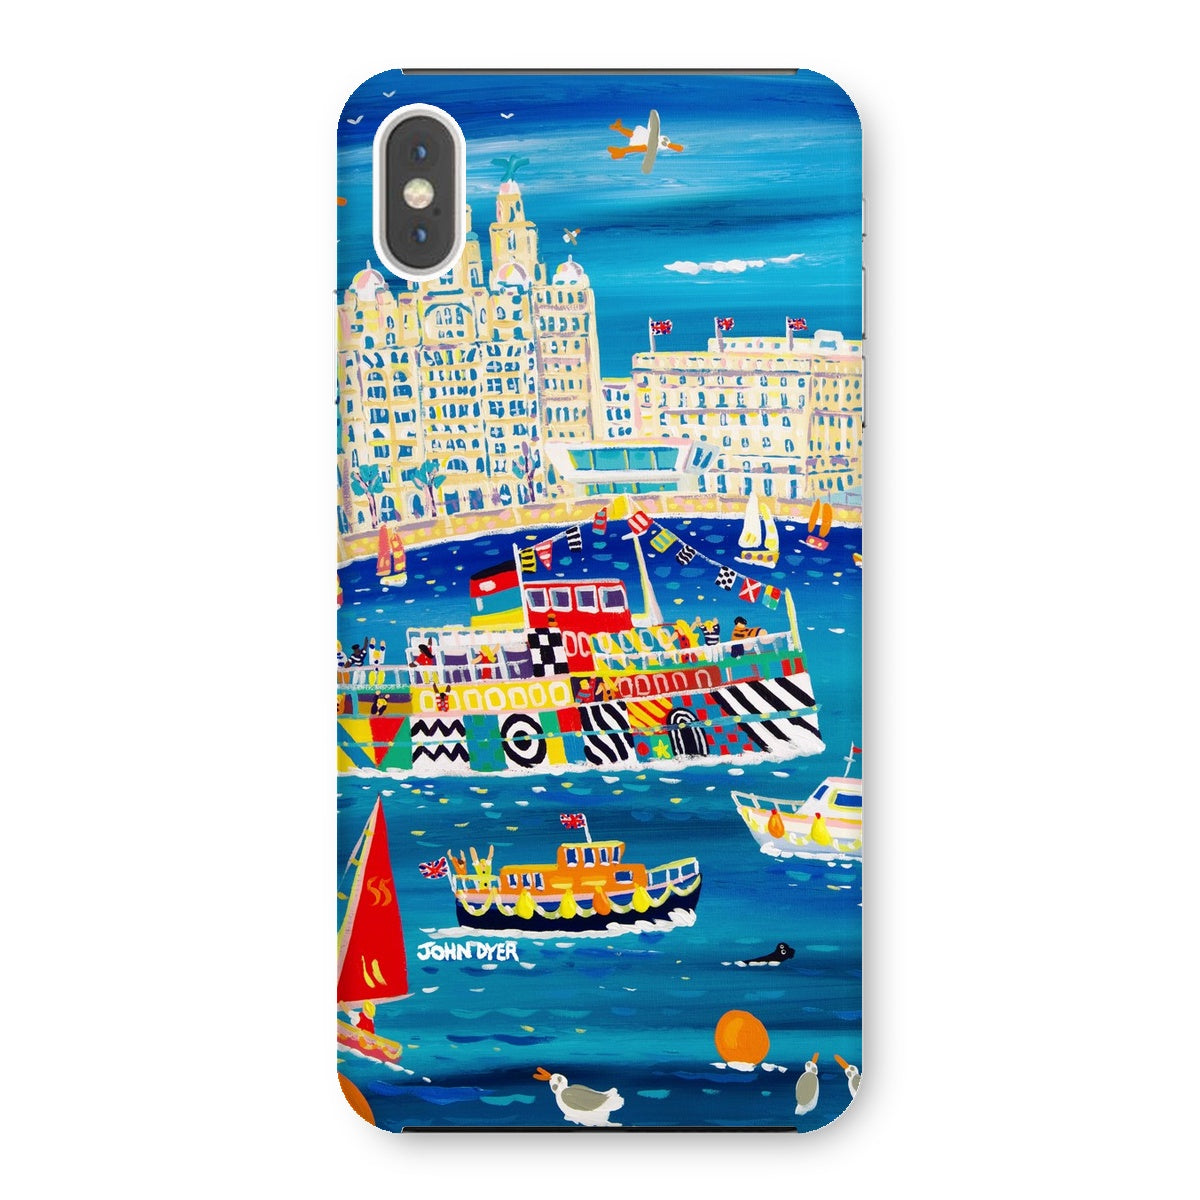 Snap Art Phone Case. Liverpool Mersey River Dazzle Ferry. Artist John Dyer. Cornwall Art Gallery